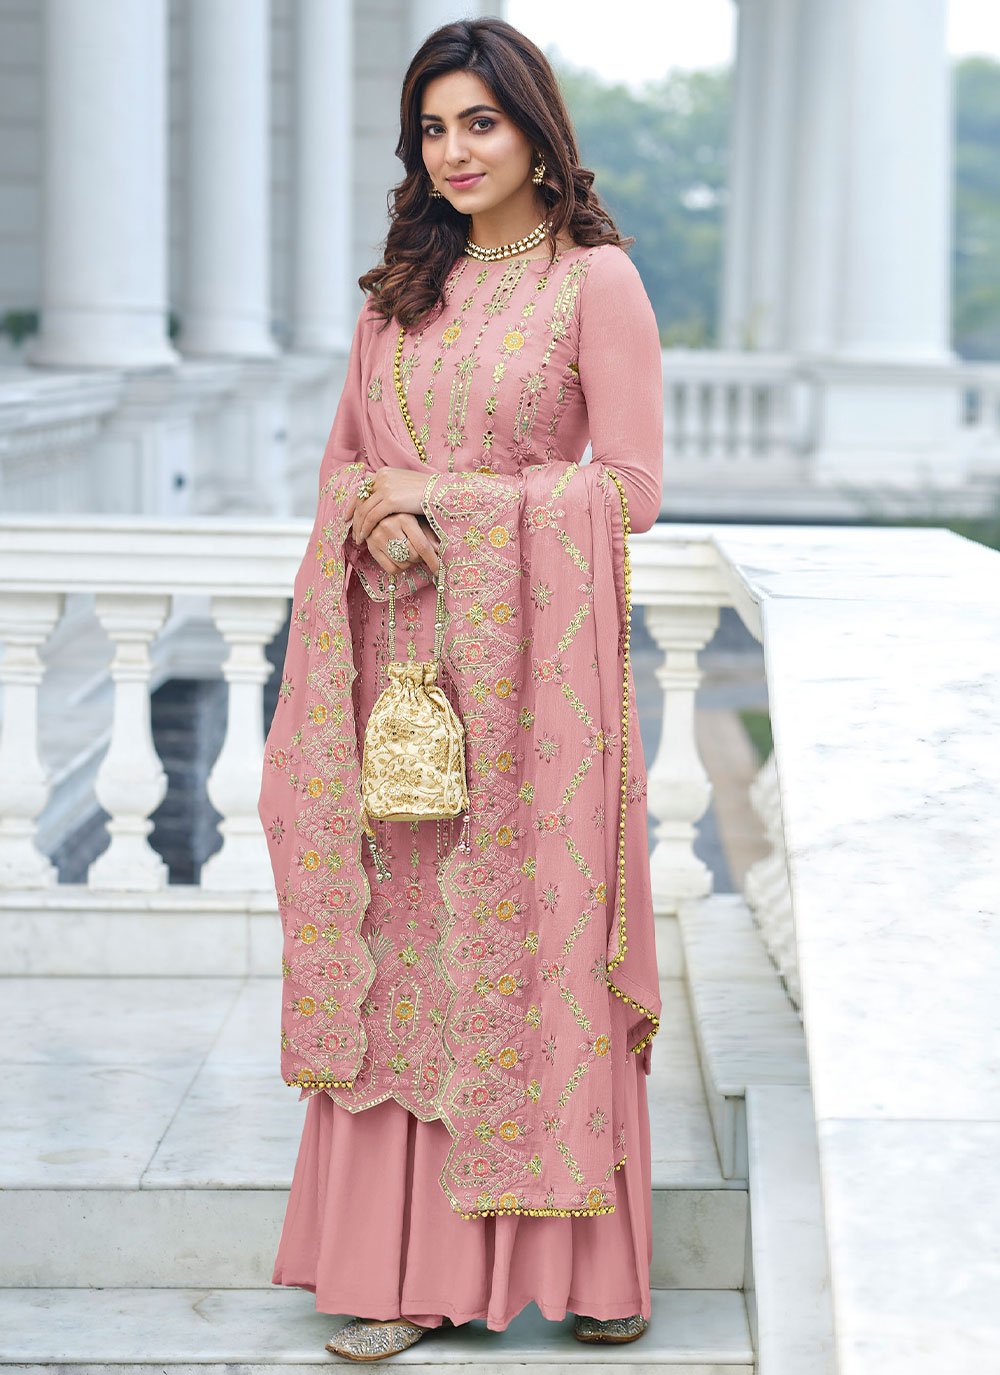 Faux Georgette Embroidered Pink Salwar Kameez